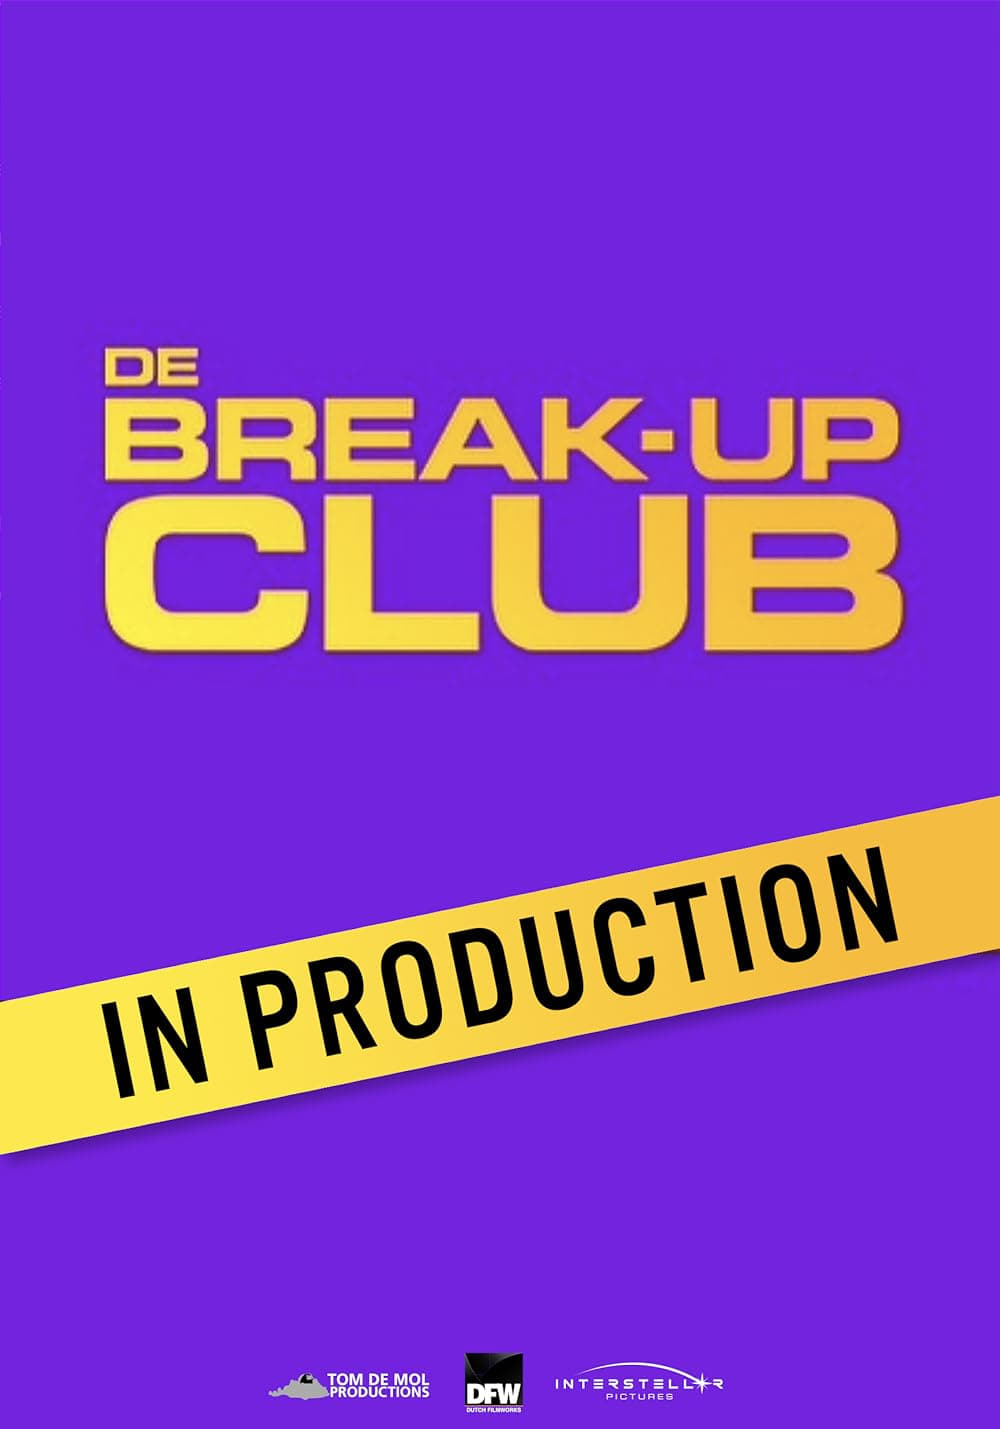 The Break-Up Club